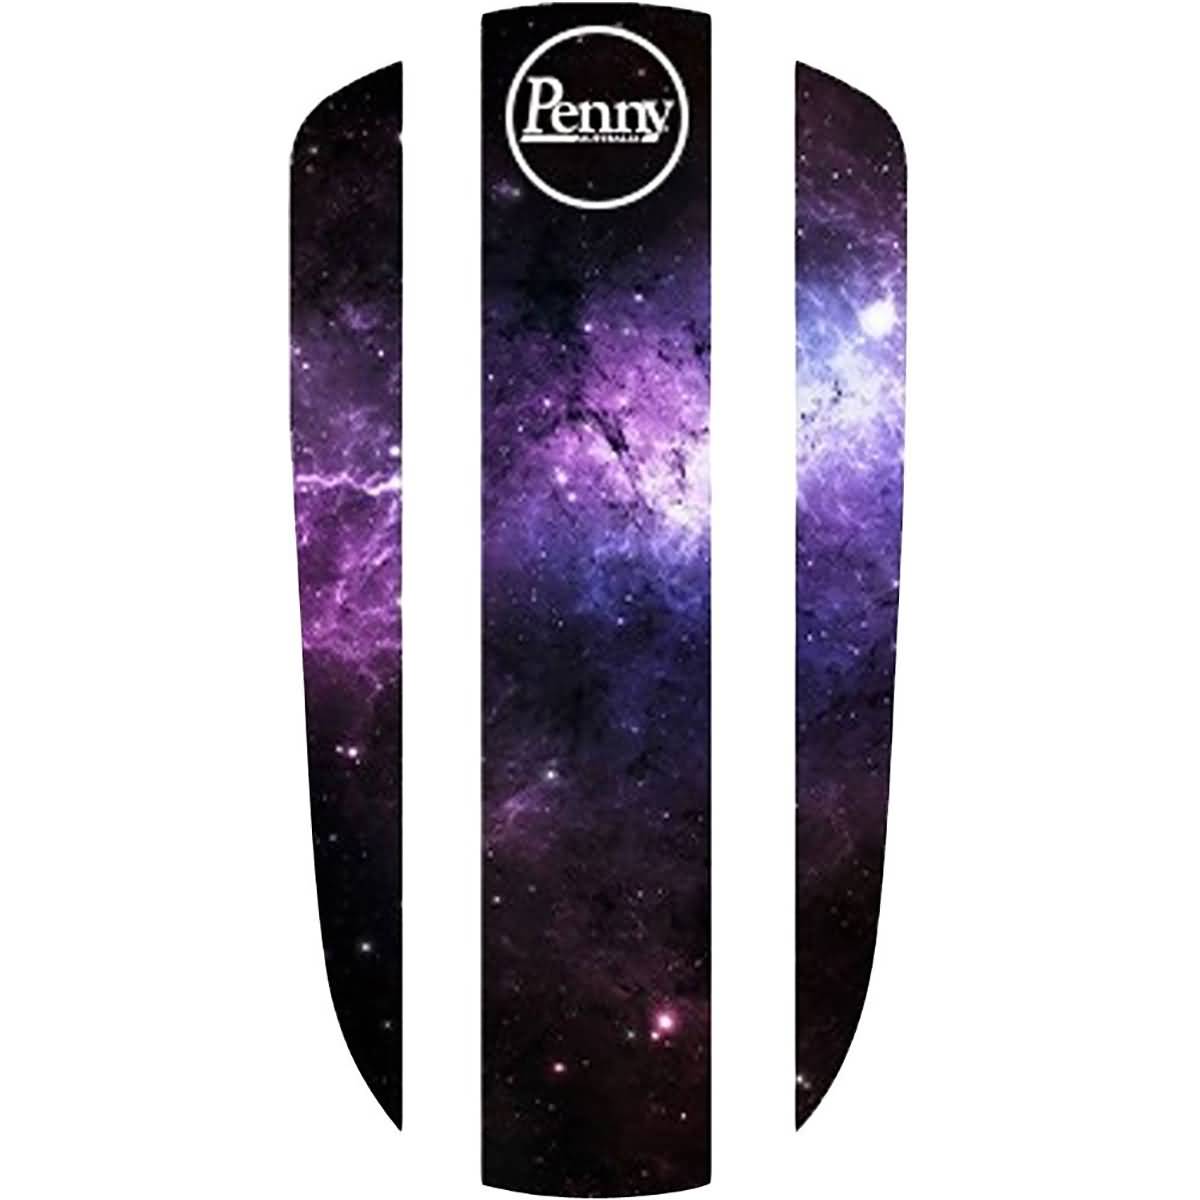 Penny Nickel Deck Panel Astro 27" Skateboard Sticker Accessories-PNYGRIPTAPE22GREEN